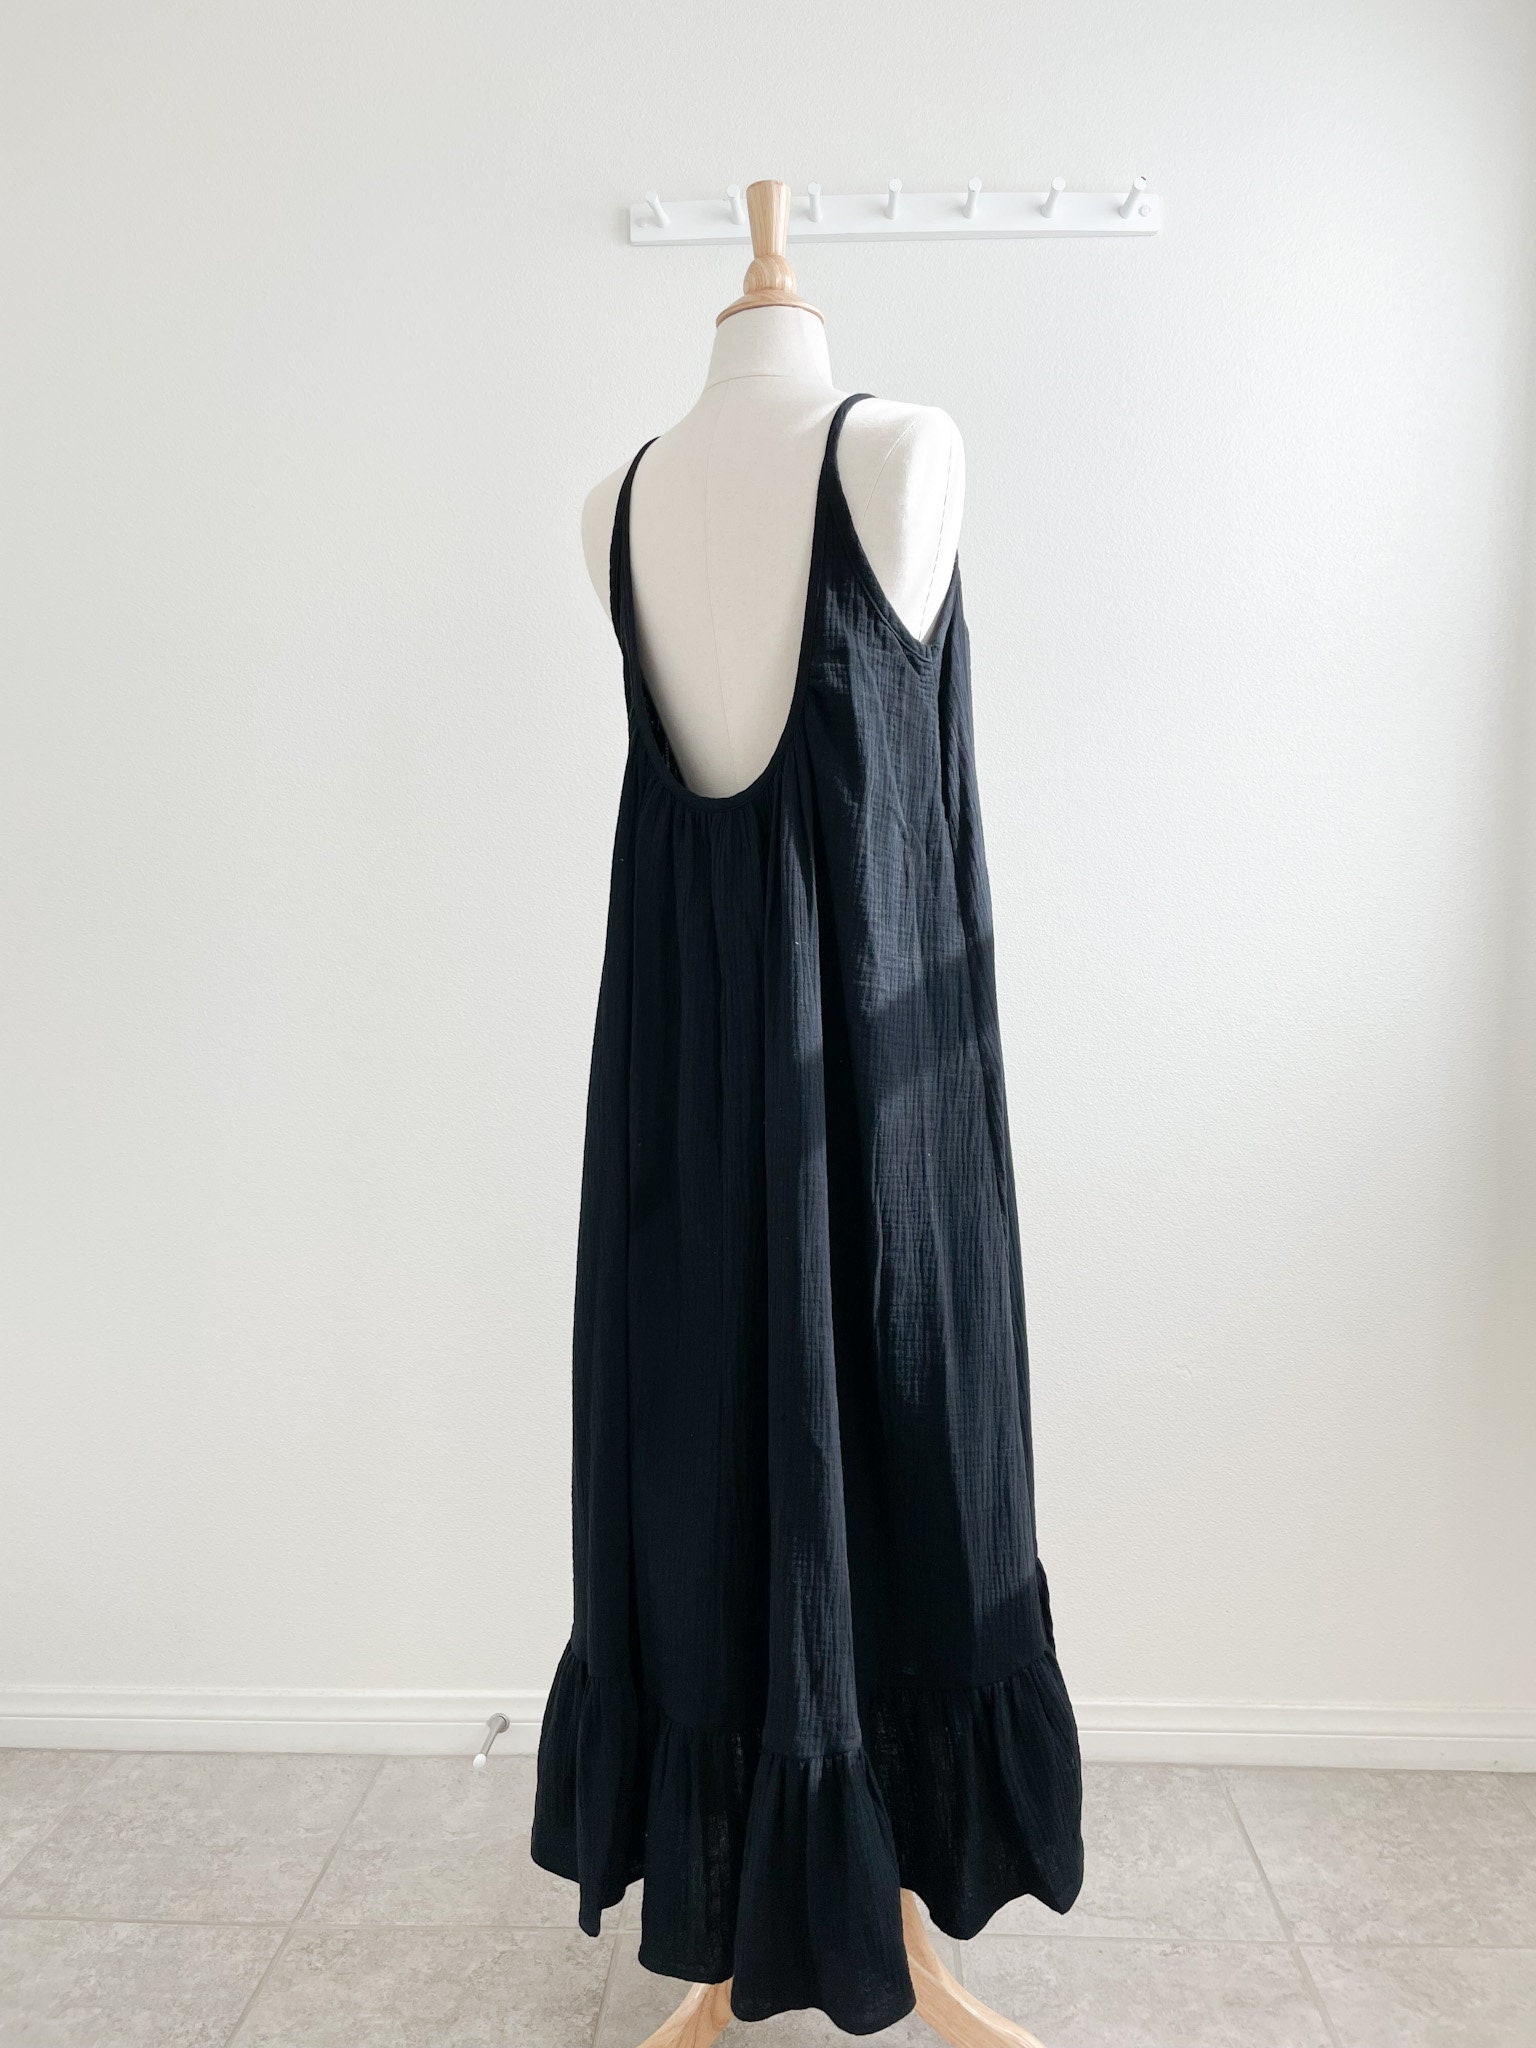 Maxi Dress ARIEL. Gauze 100% Cotton Ruffled Dress With Low Back